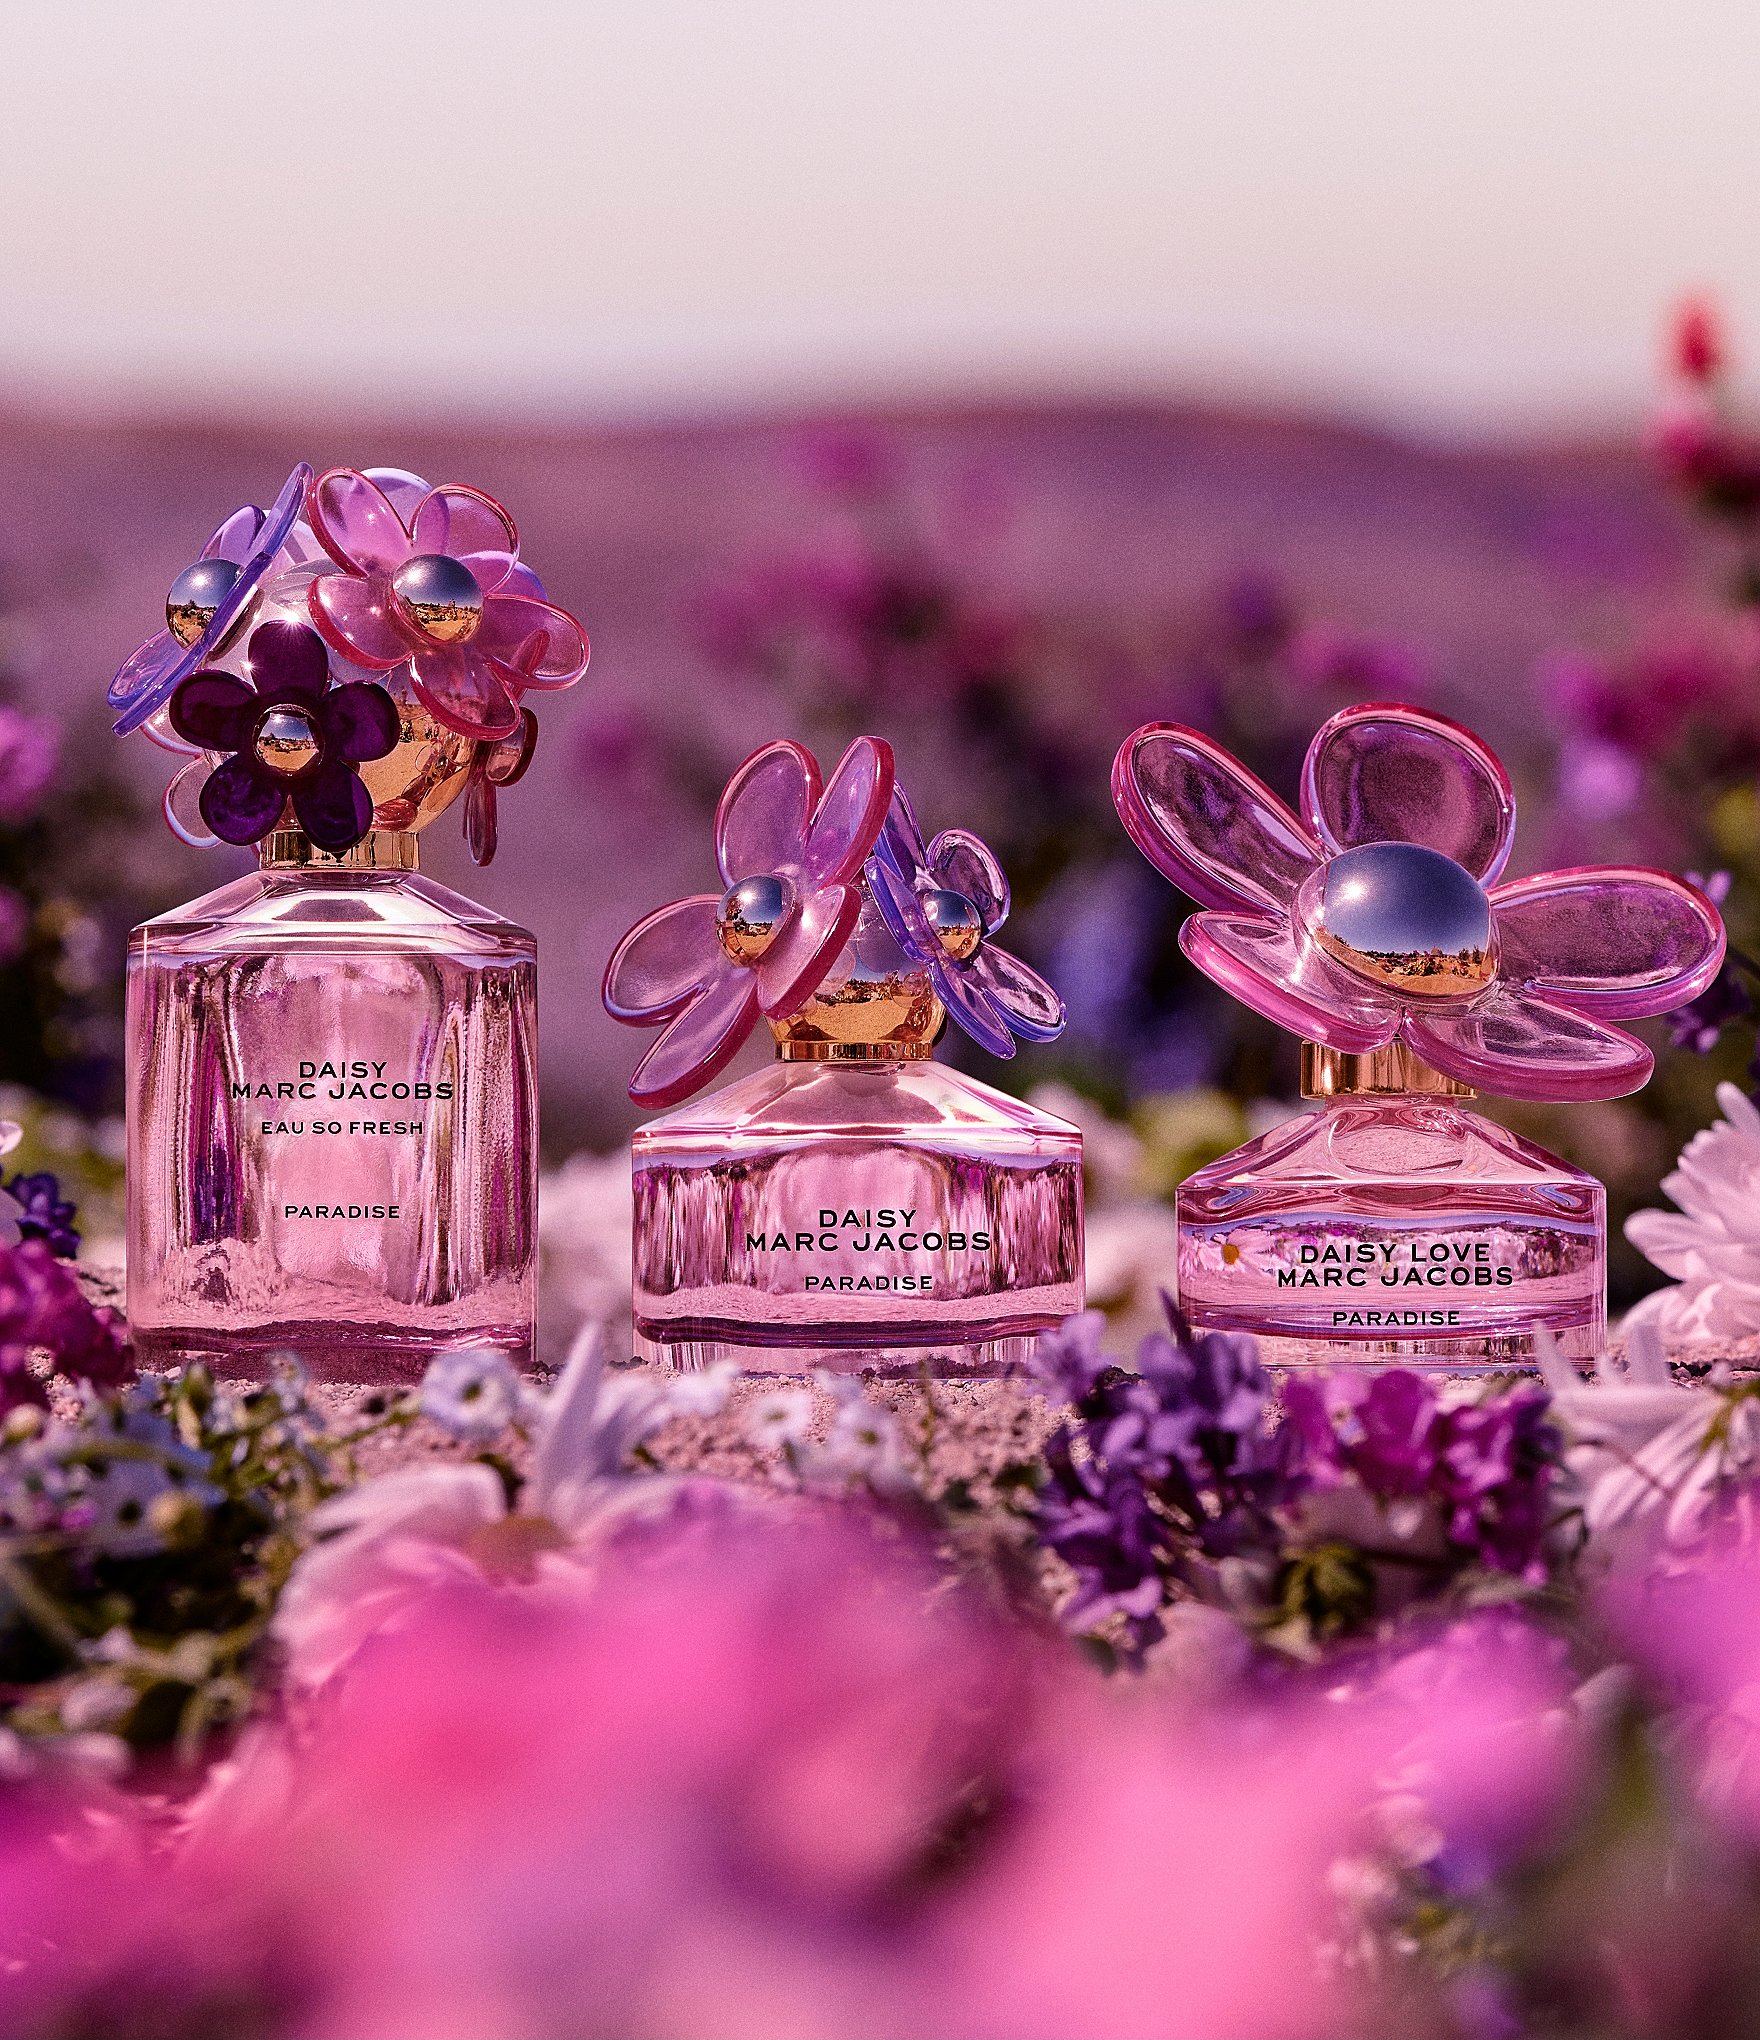 Long-lasting Fragrance? Discover Marc Jacobs Perfume's Endurance